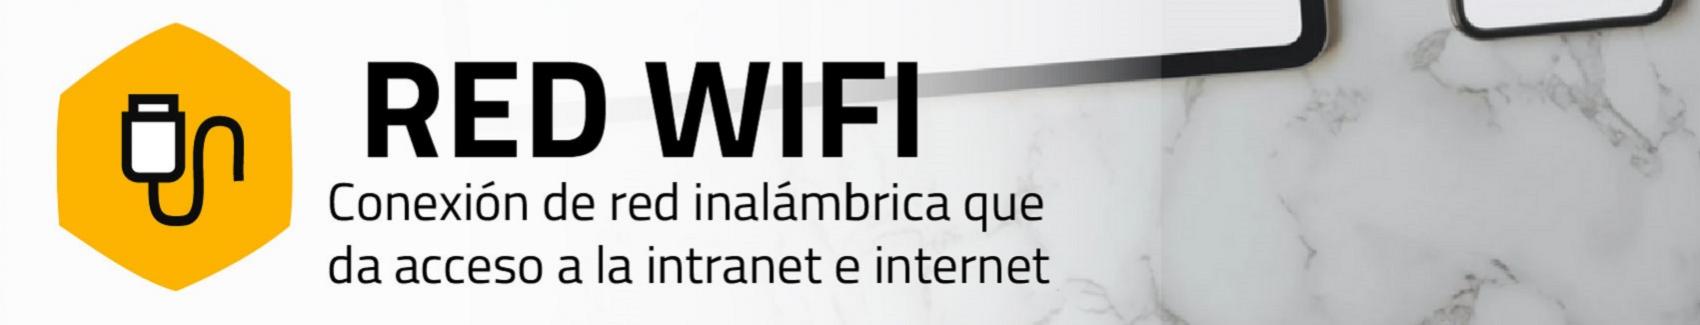 Imagen servicio Red WiFi